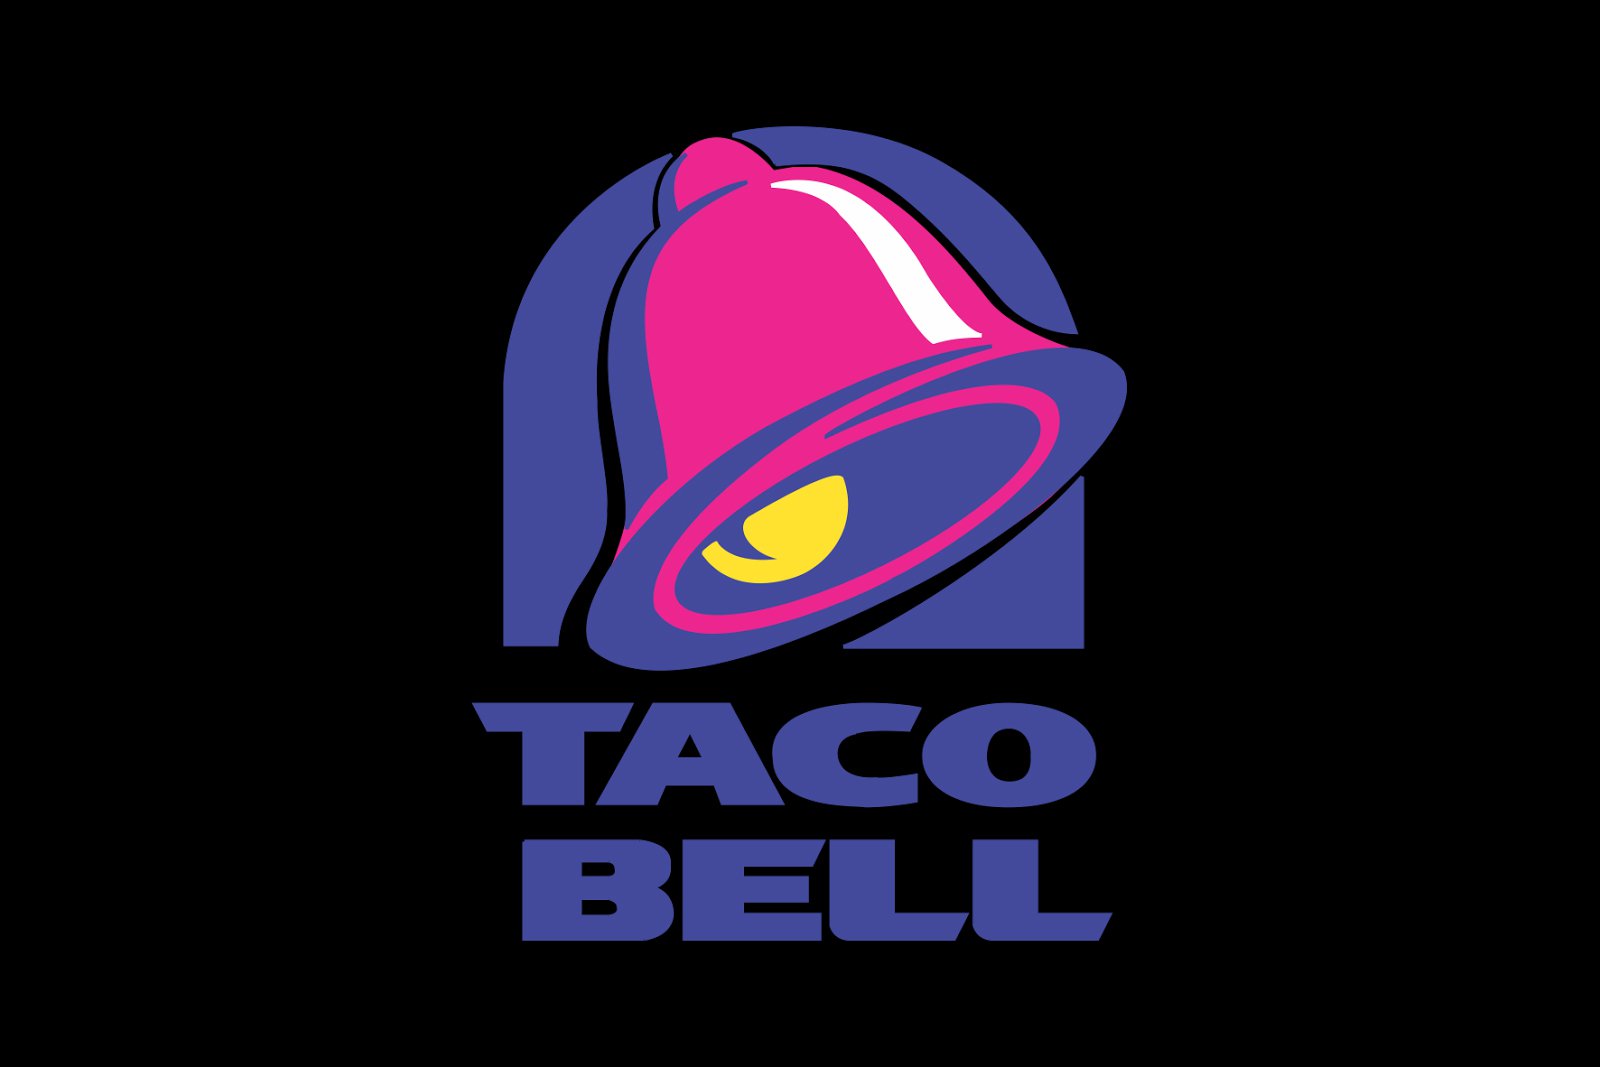 taco bell wallpaper,logo,text,font,graphic design,graphics